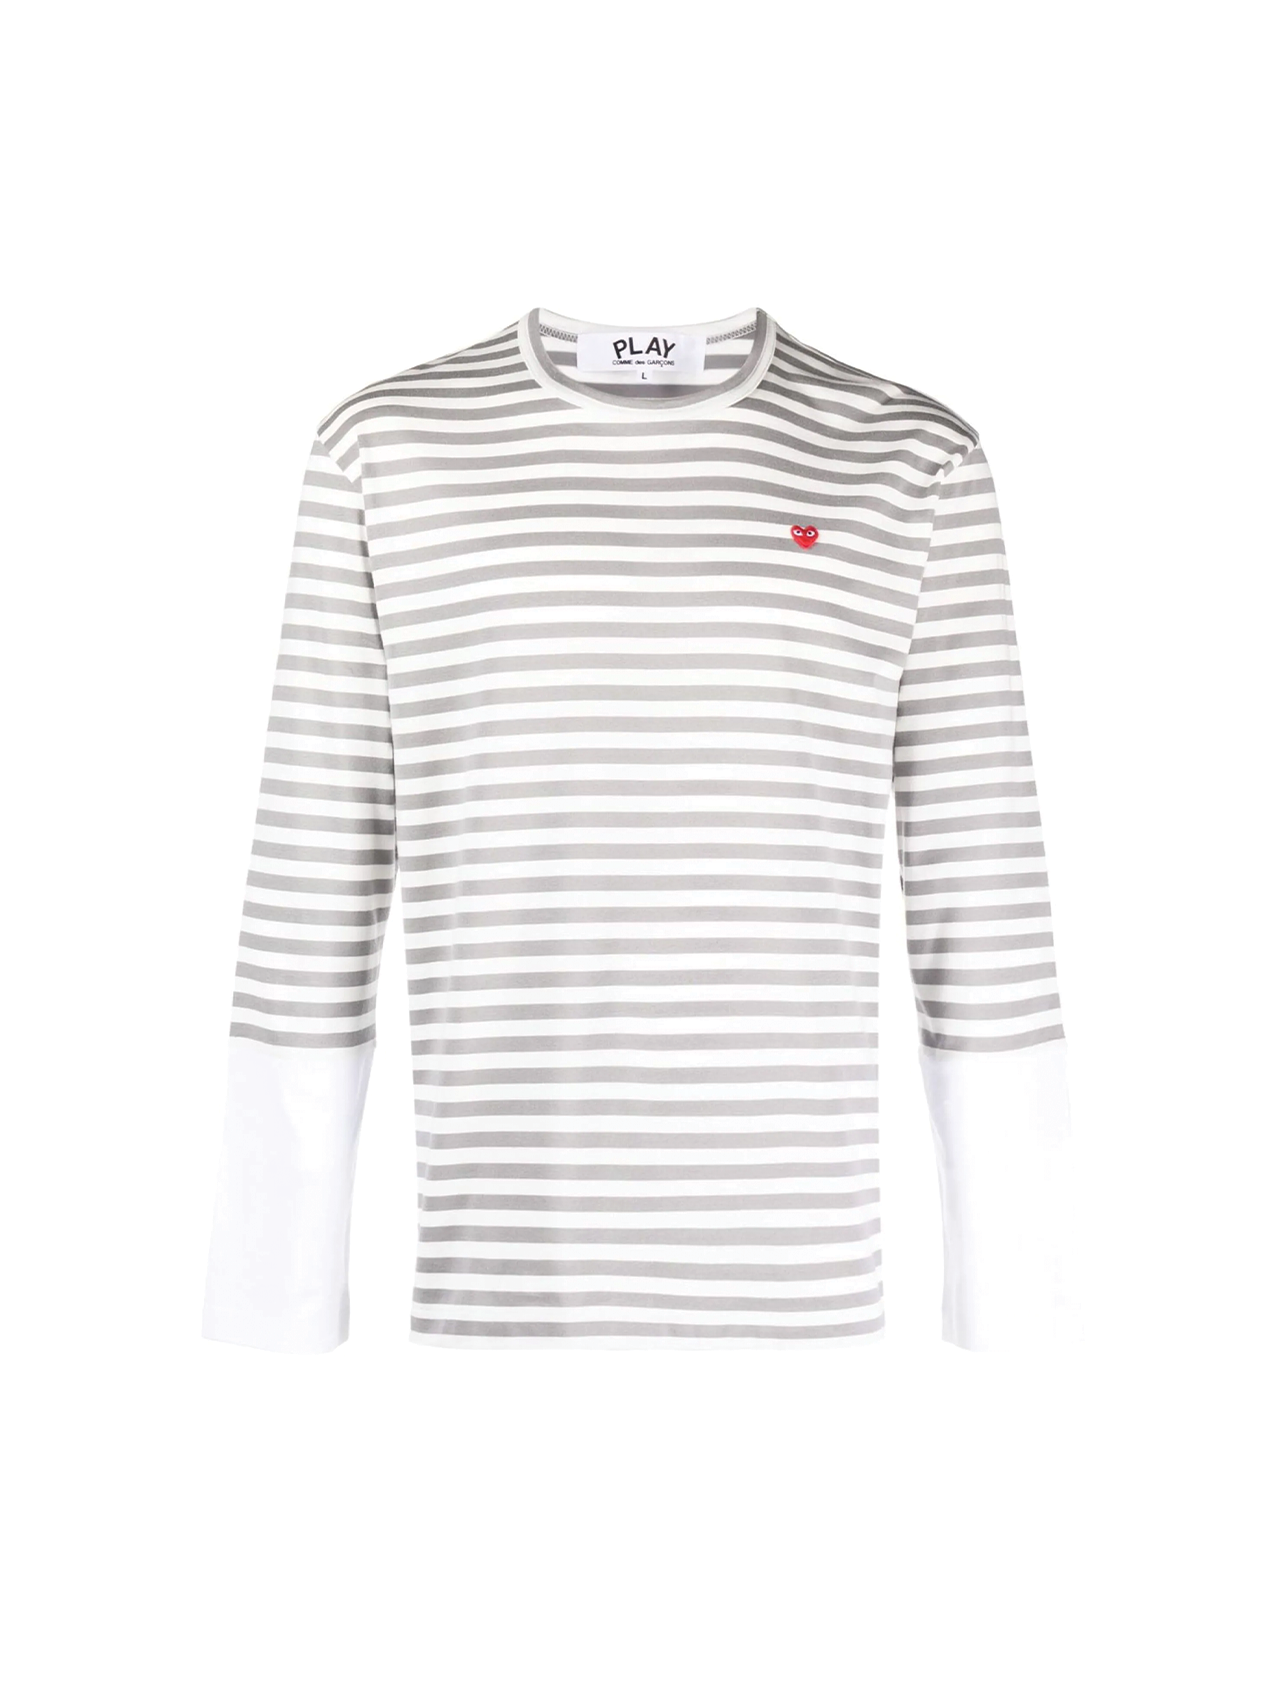 CDG PLAY Light Grey Stripe Logo Patch Long Sleeve Shirt